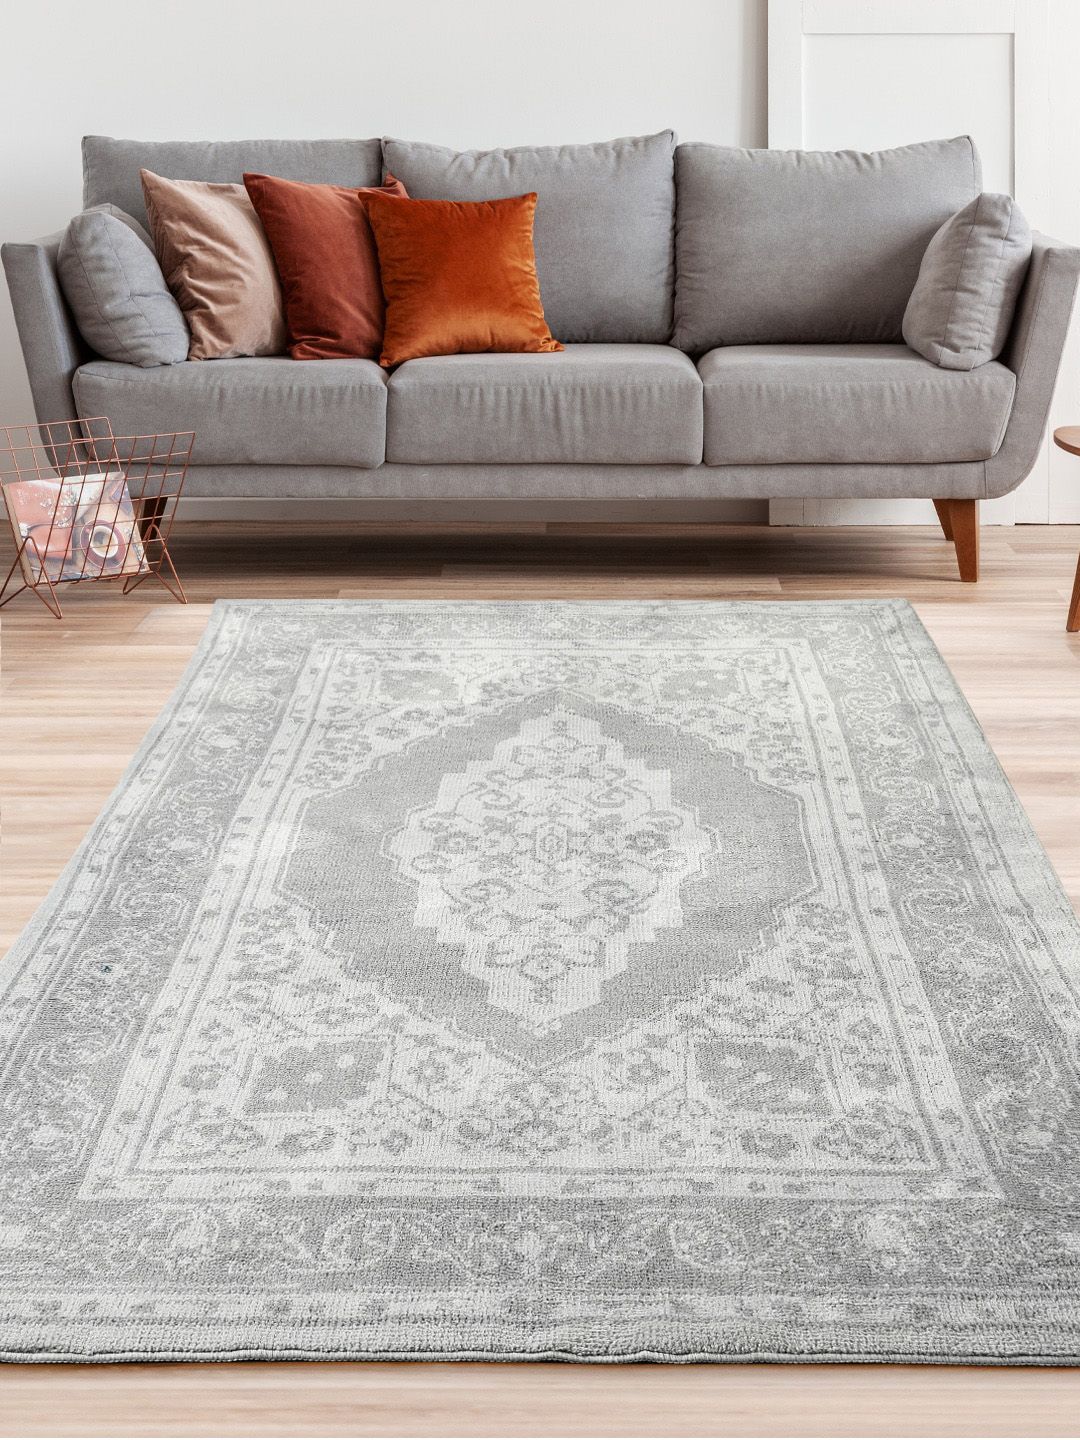 Saral Home Grey Printed Cotton Rectangular Carpet Price in India